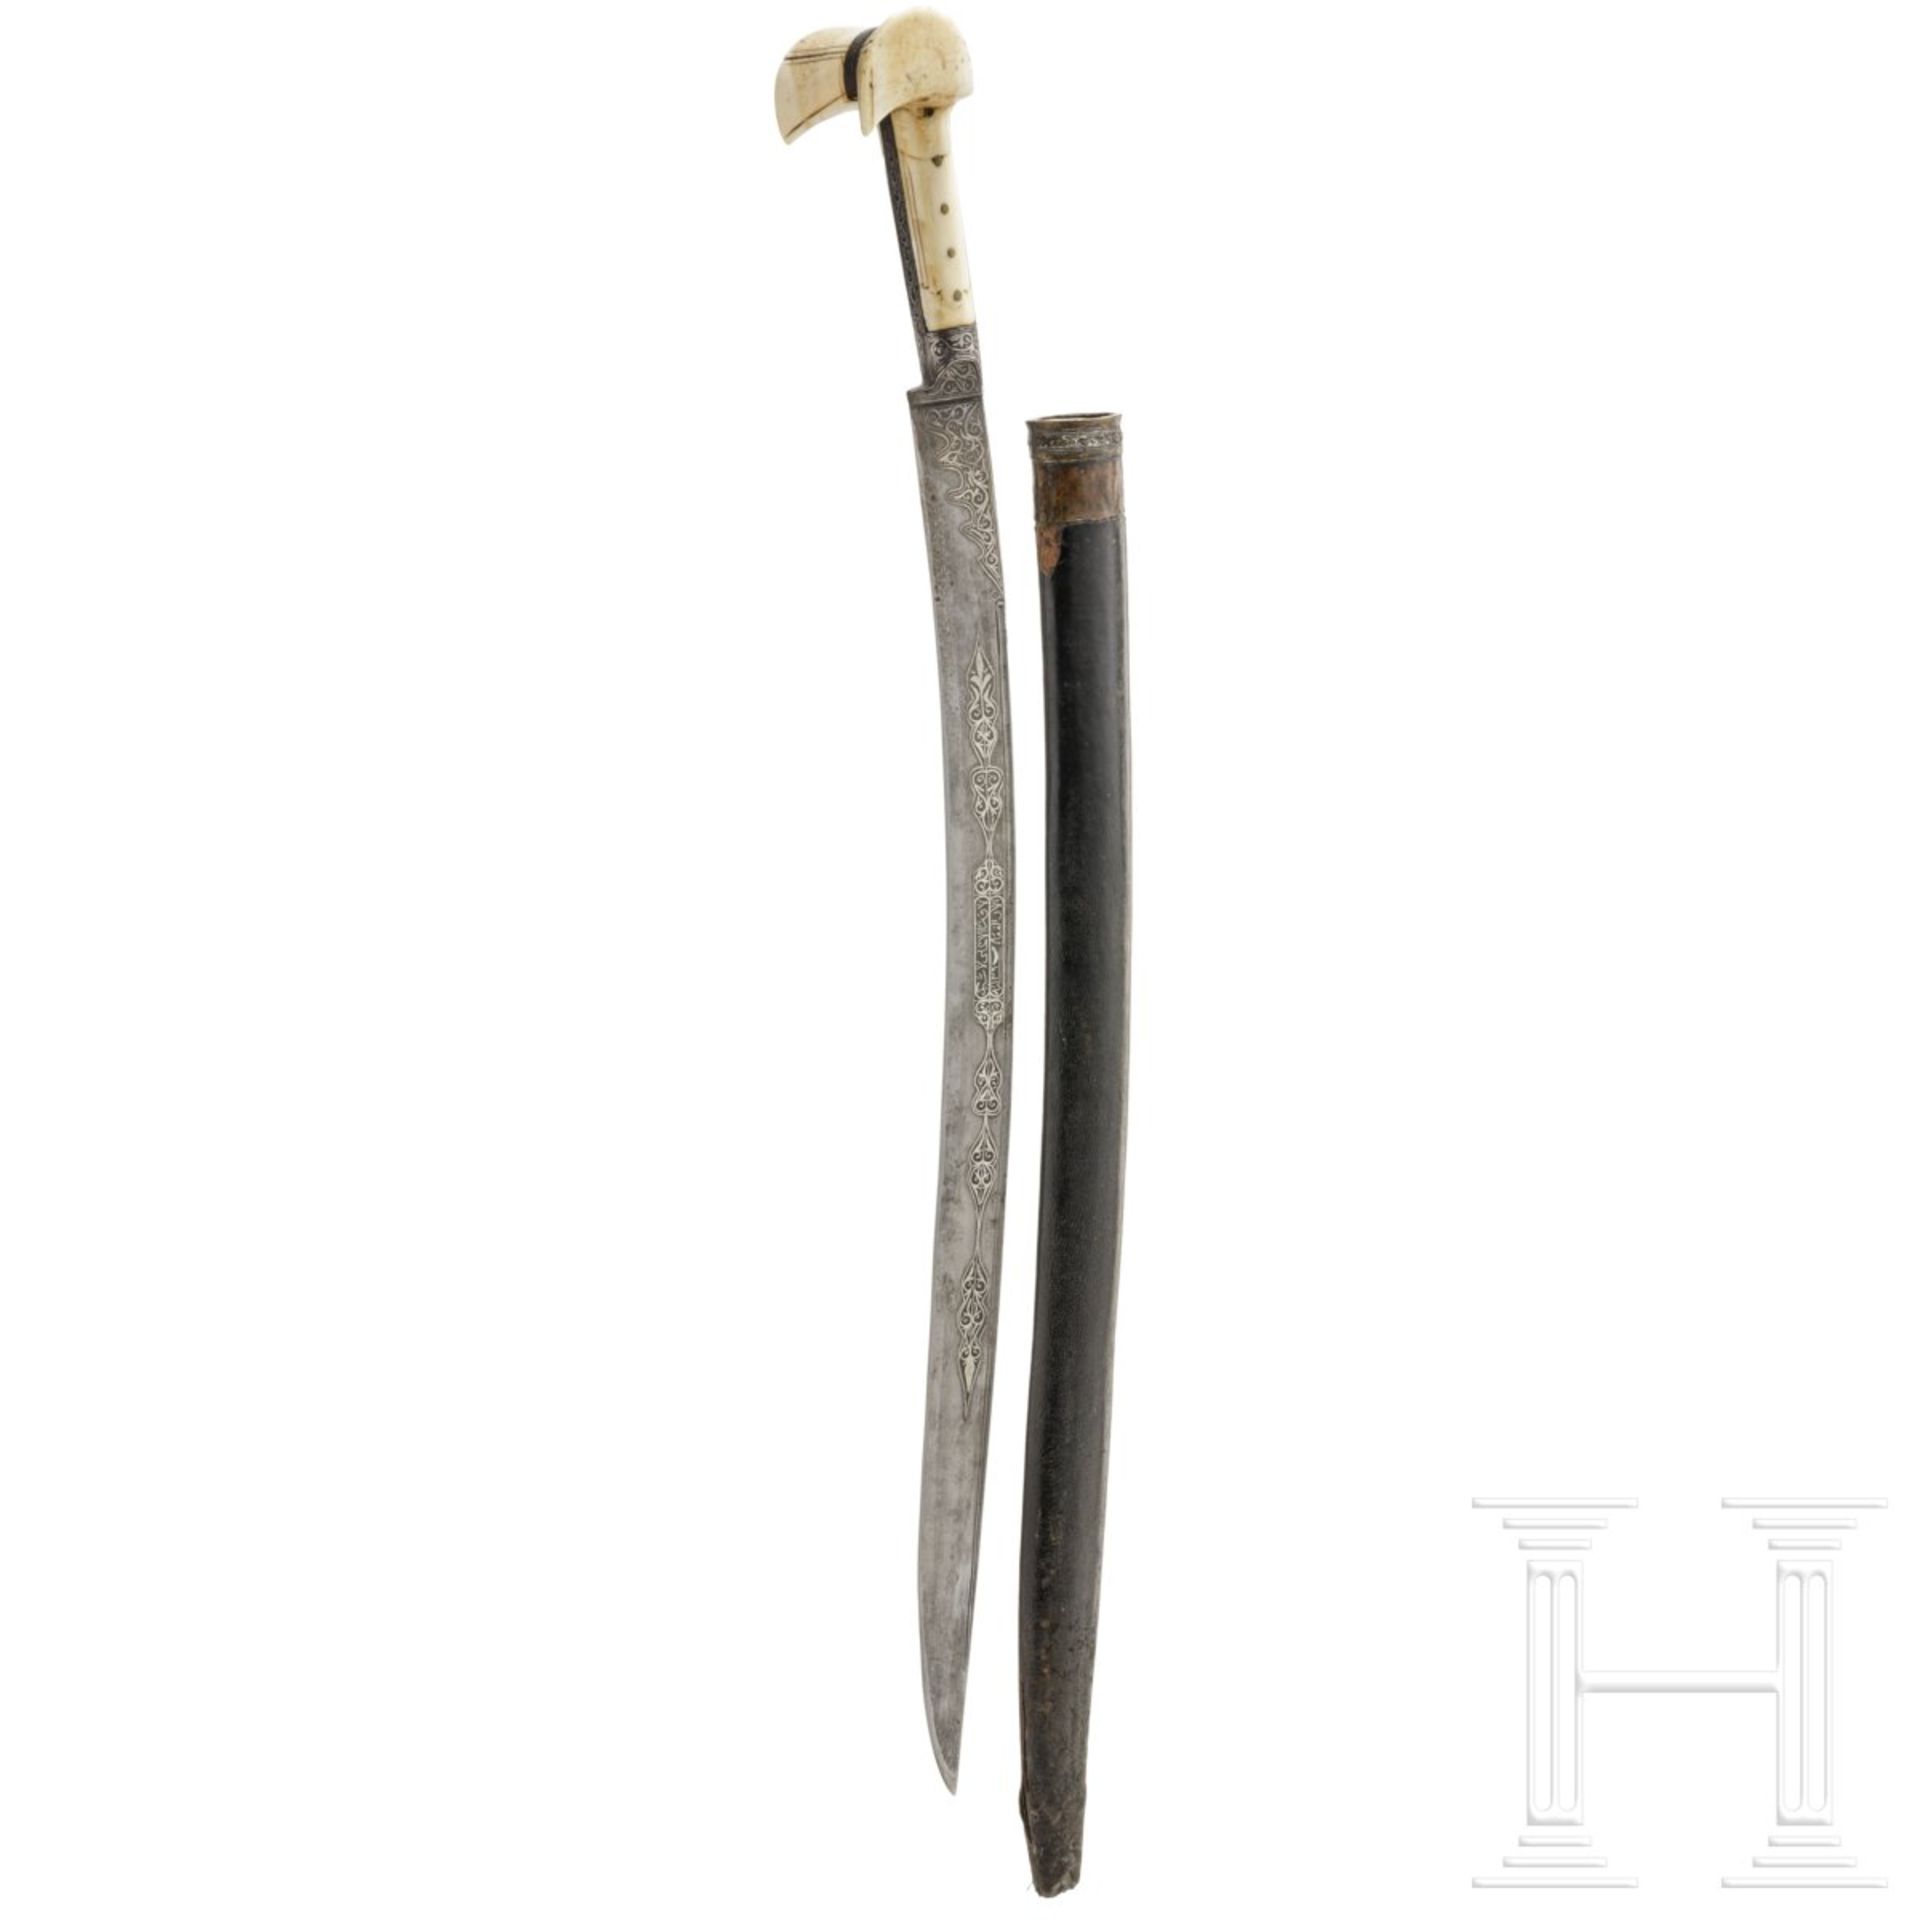 Silbertauschierter Yatagan für Offiziere, osmanisch, datiert 1209 H (1294/5)Gekrümmte Rückenklinge